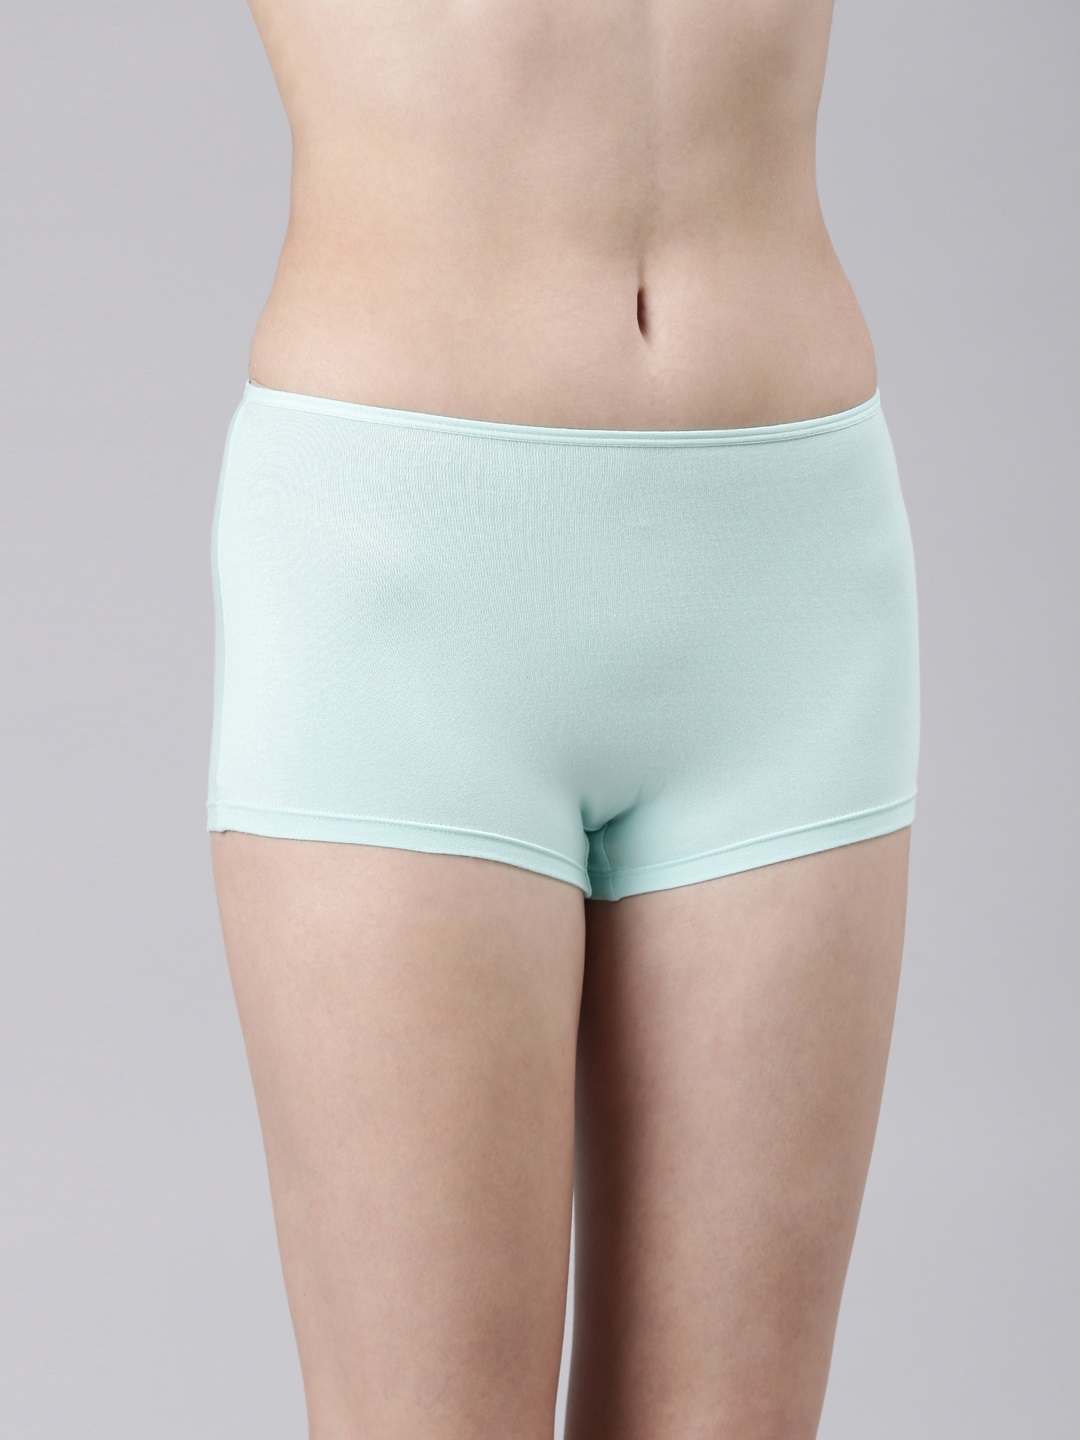 buy women lingerie bra panty and underwear online shopping in India Metal  Print